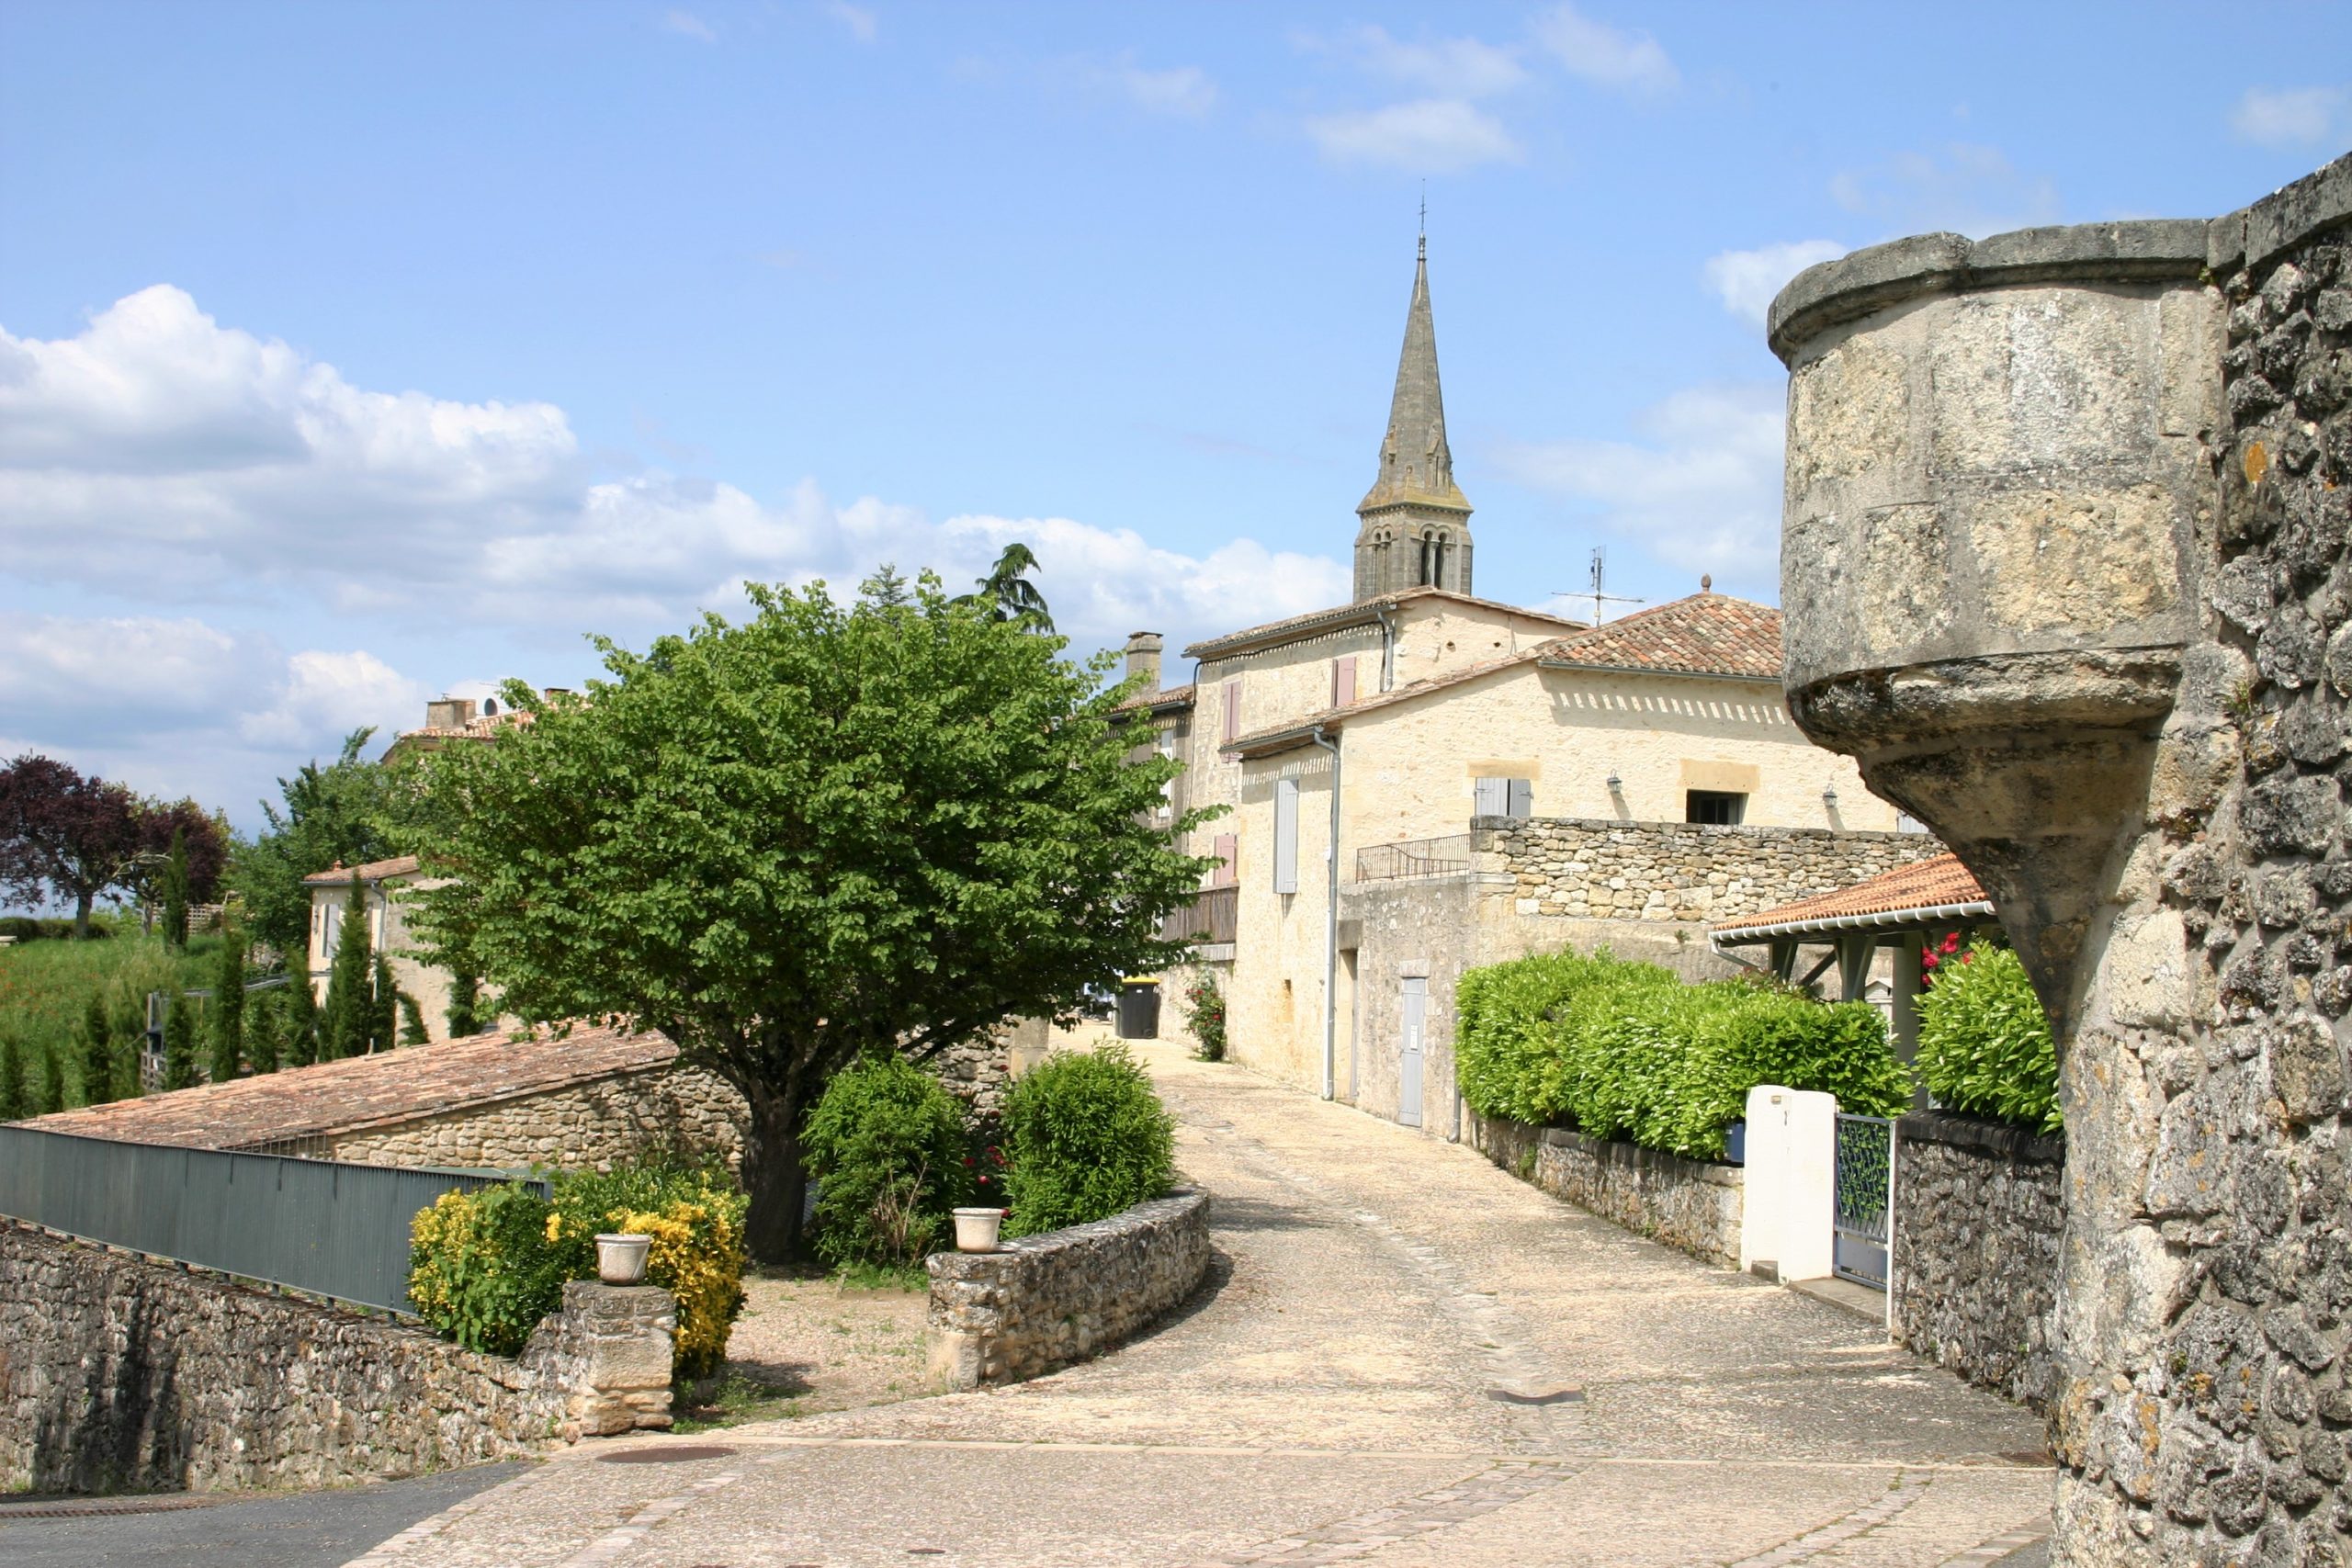 Walk in the medieval village of Gensac